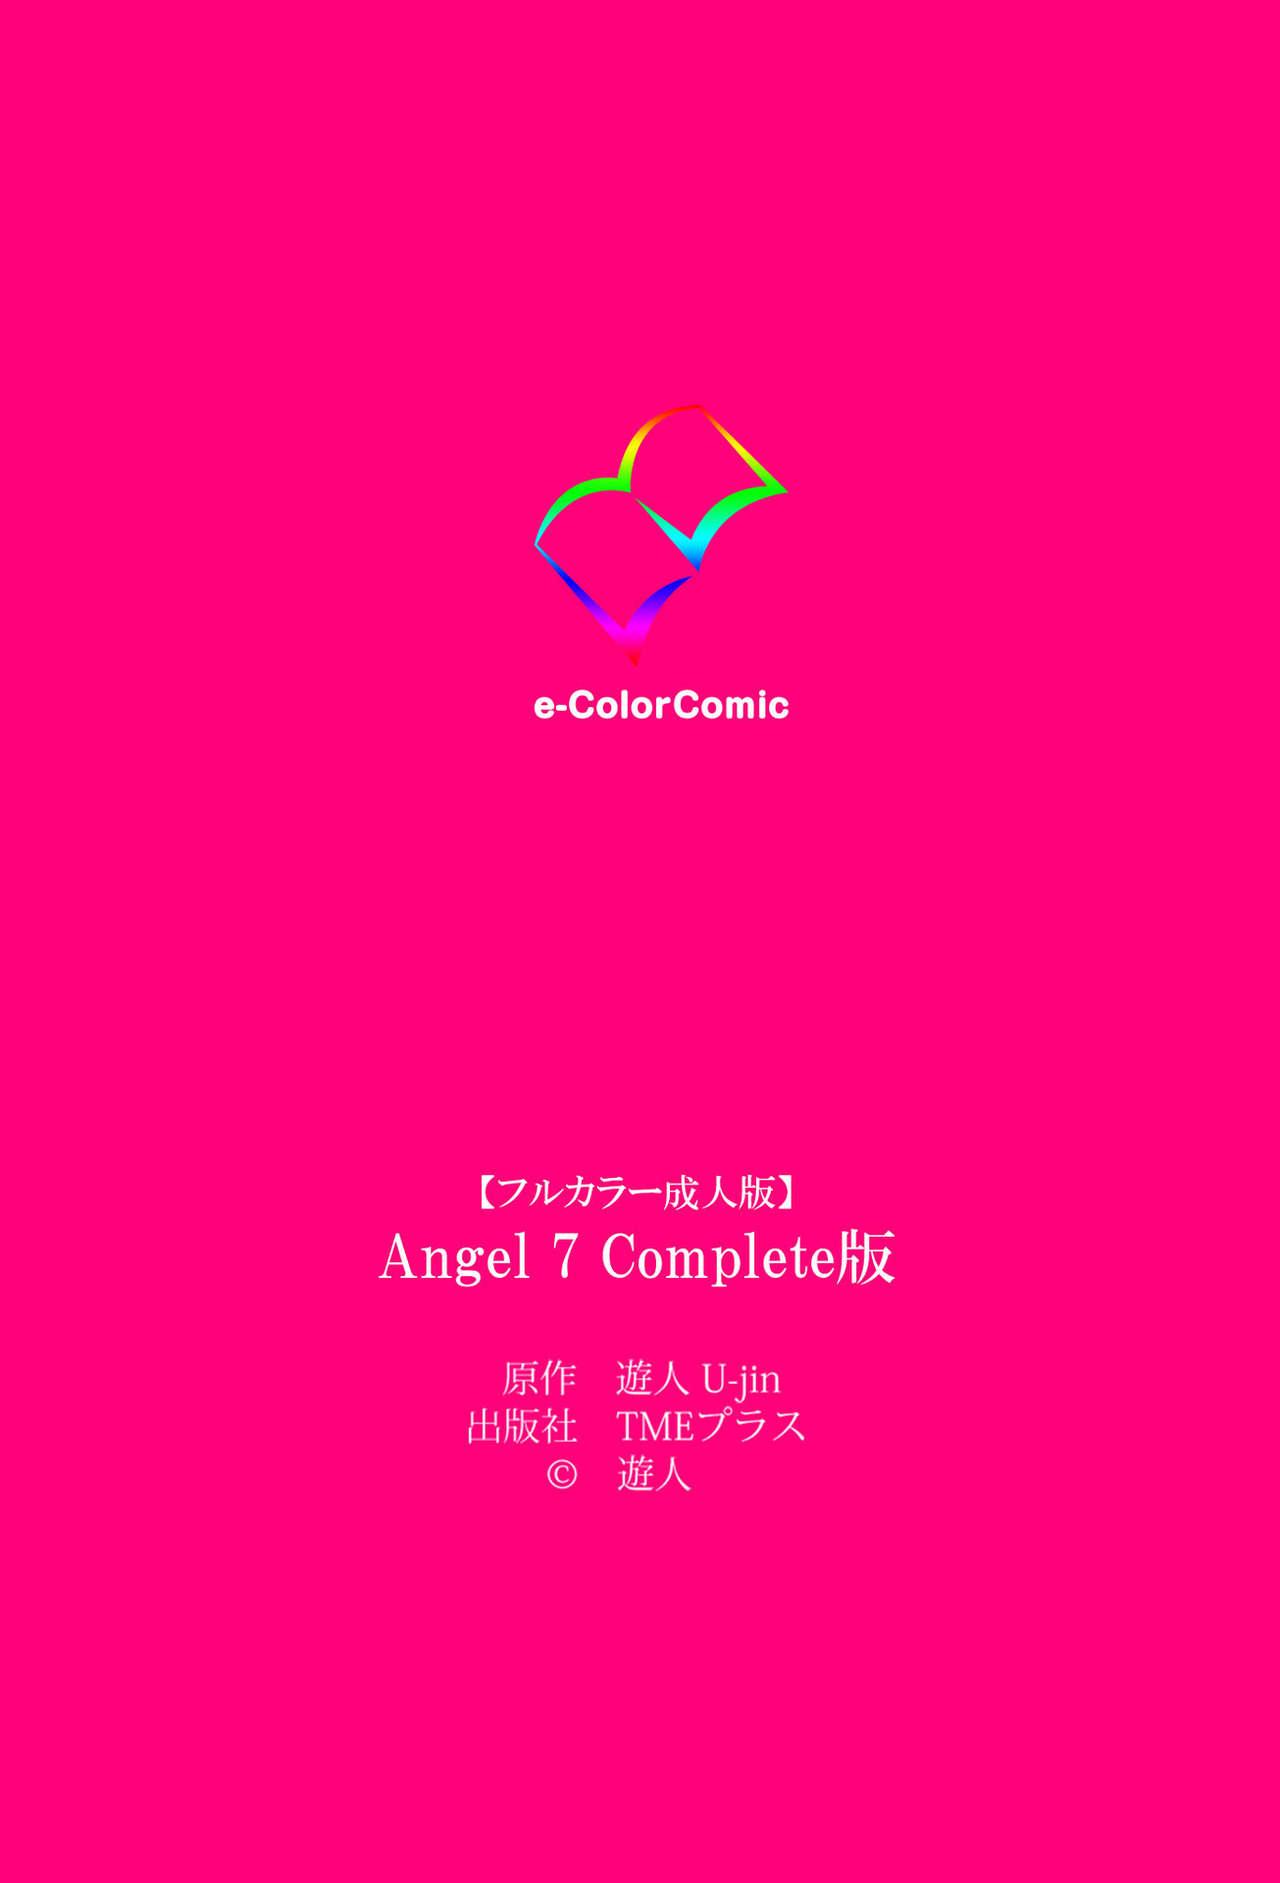 ANGEL 7 Completeban 134